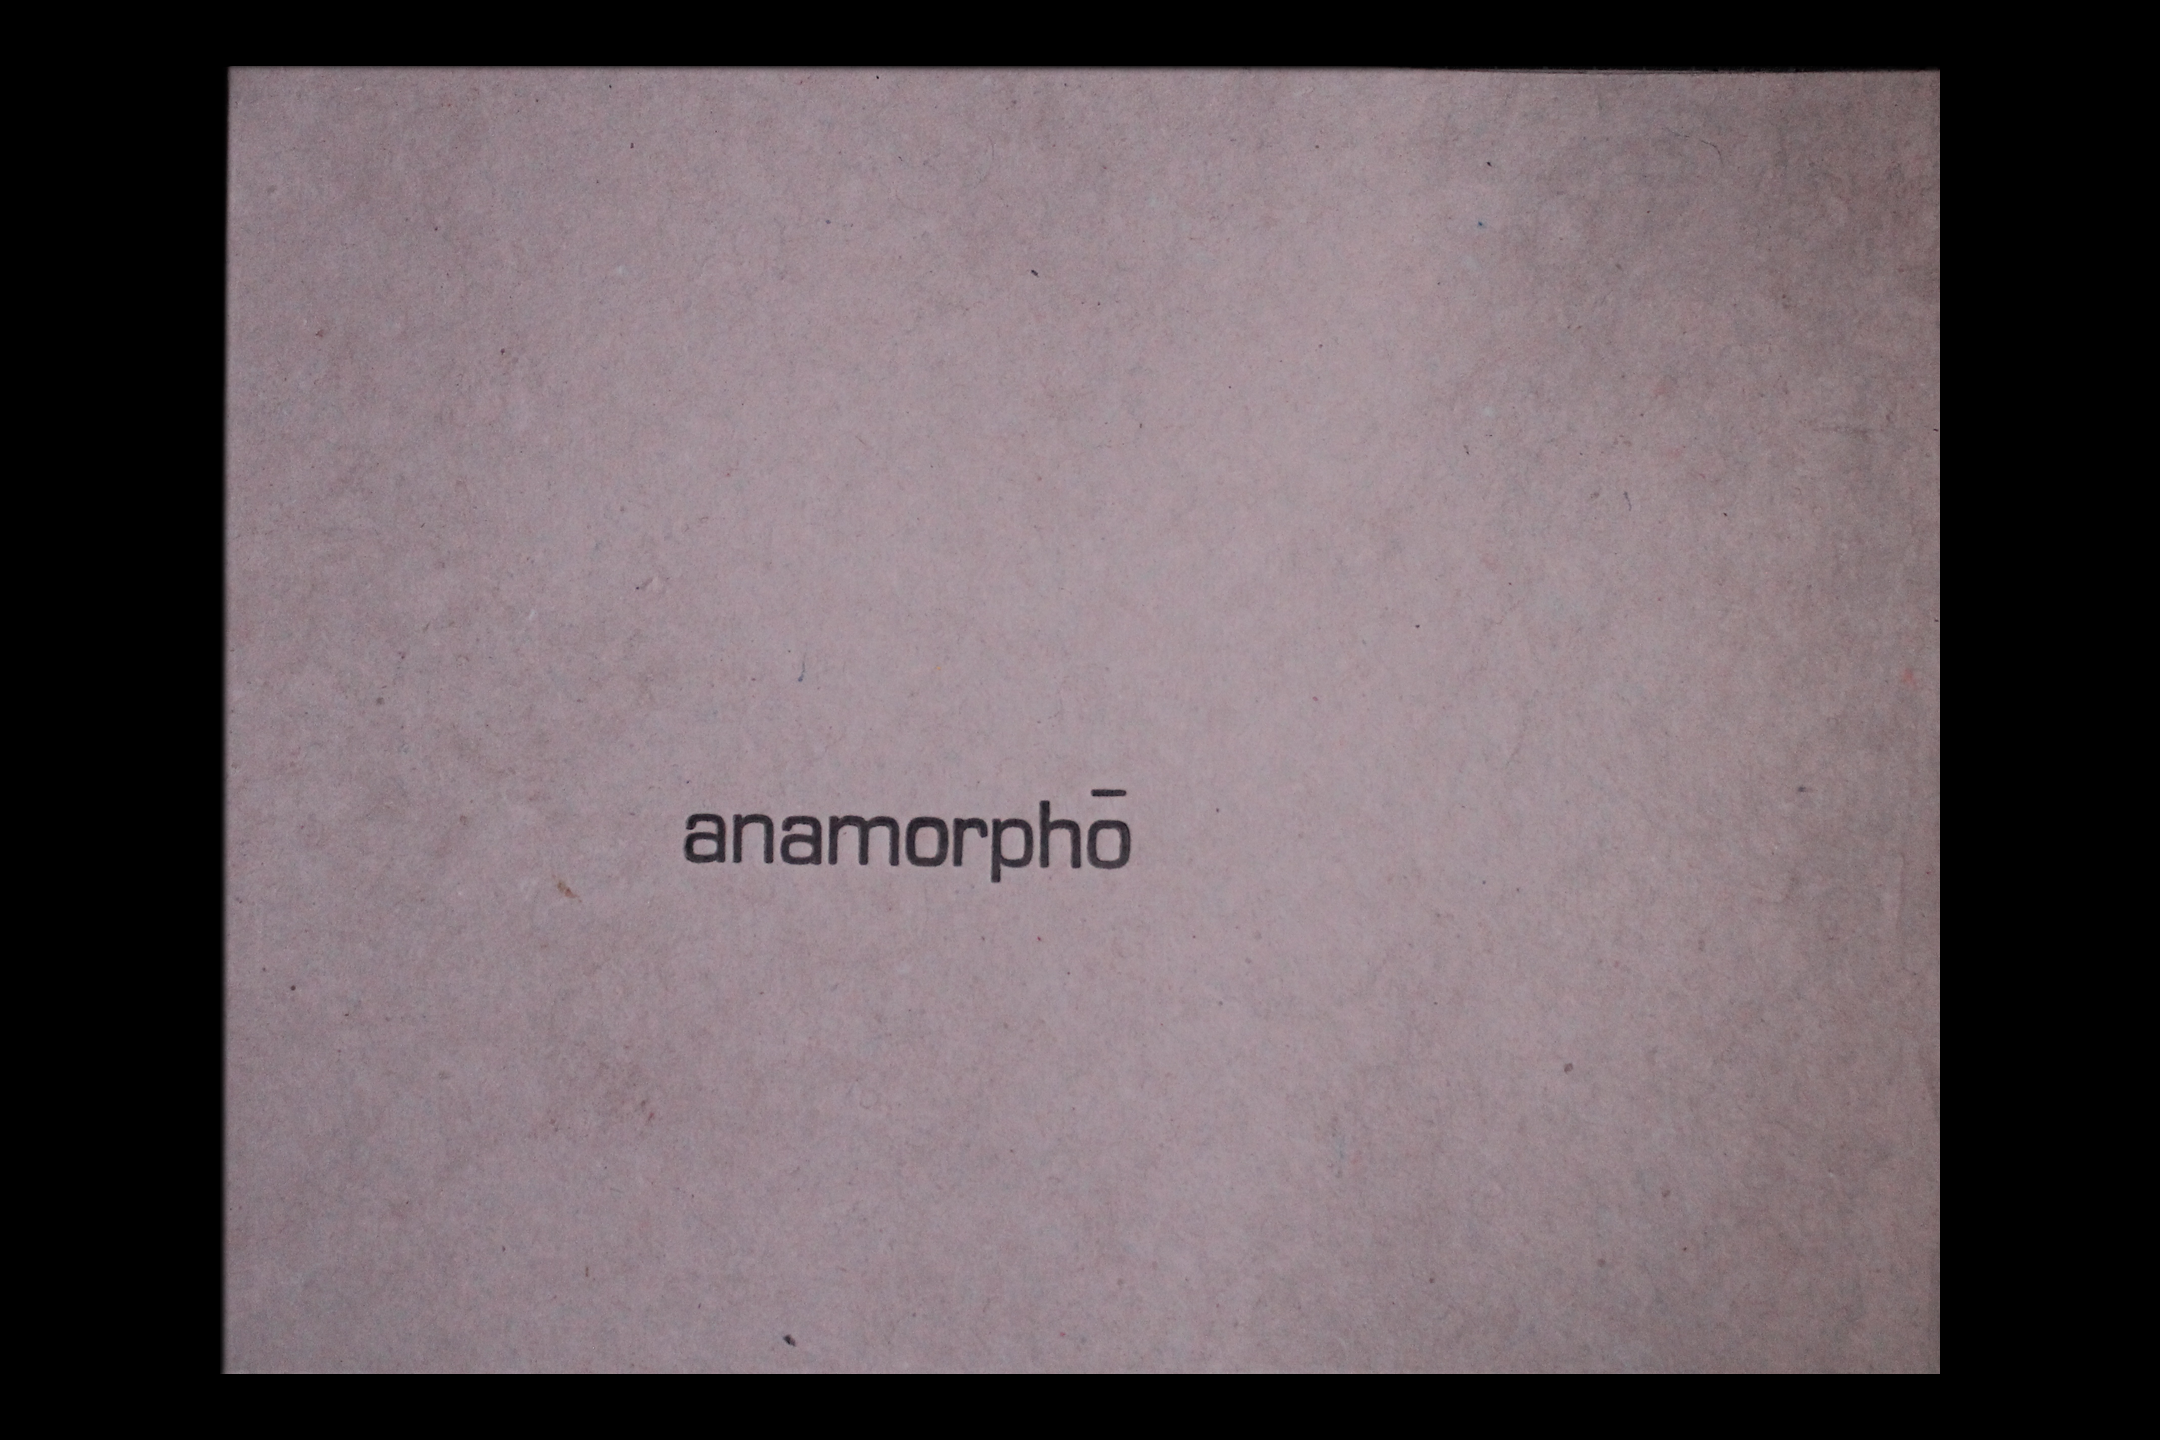 anamorpho